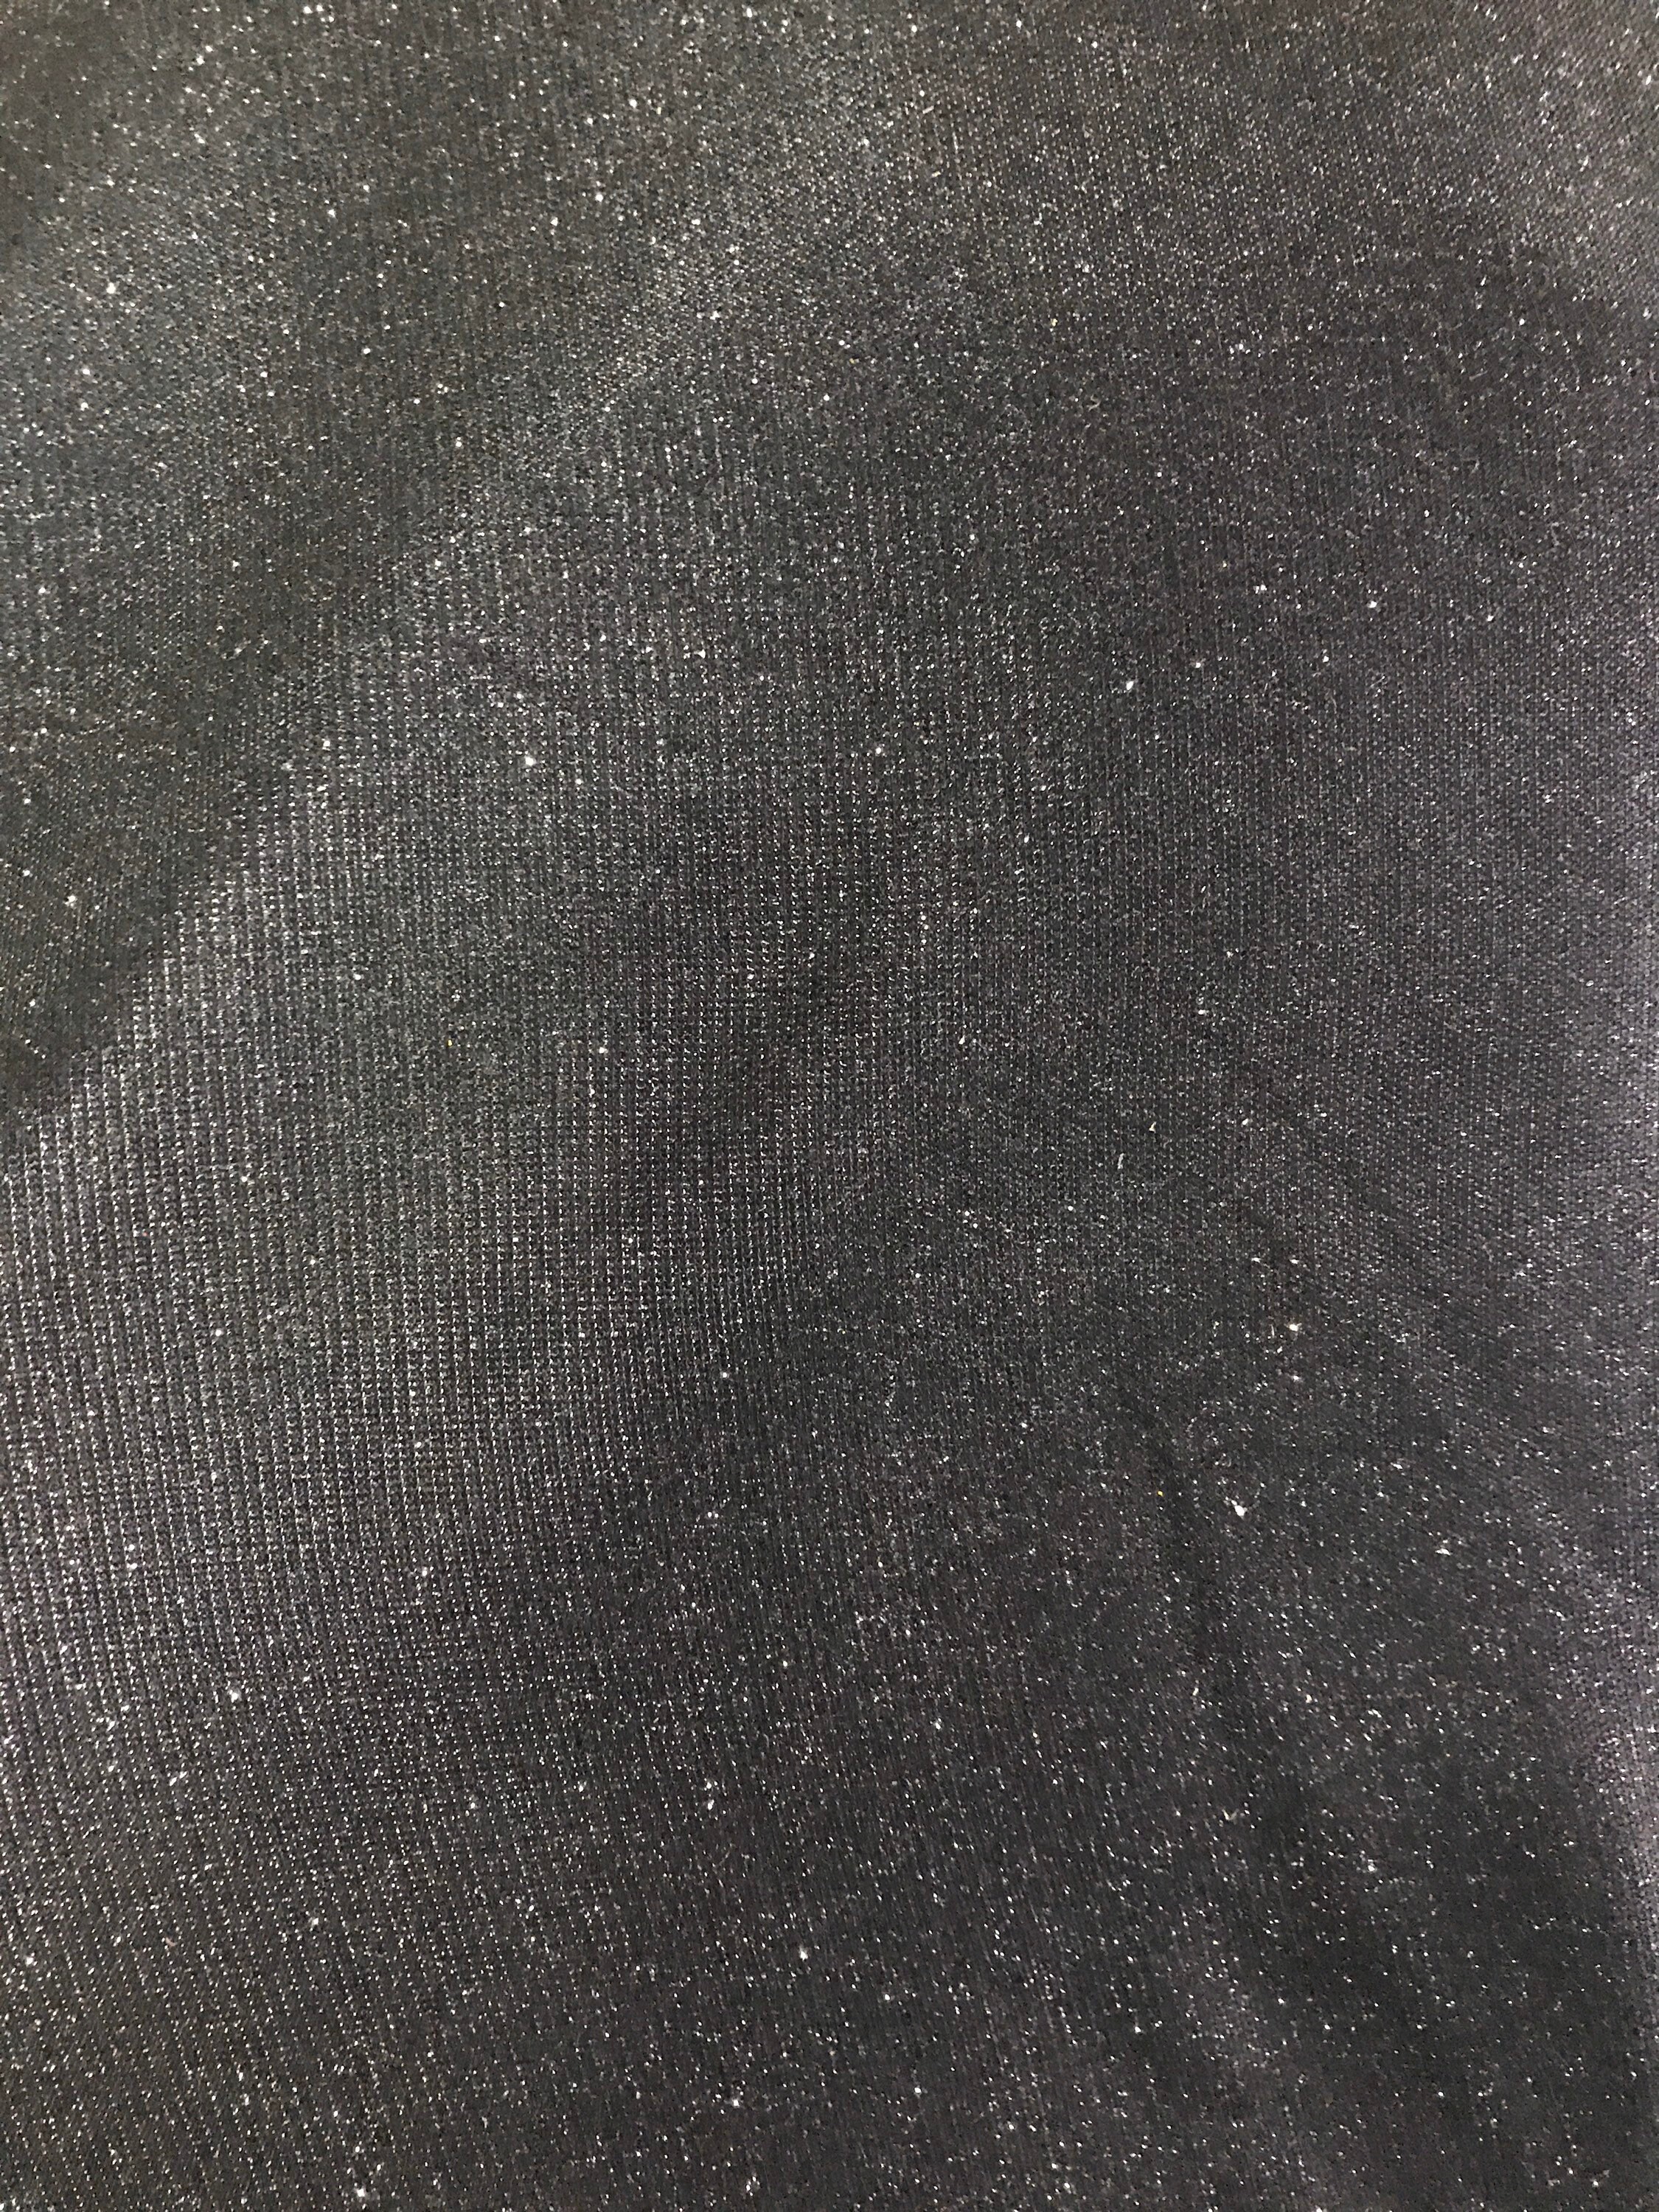 Black Ice Stardust Stretch Glitter Fabric by the yard 14 | Etsy